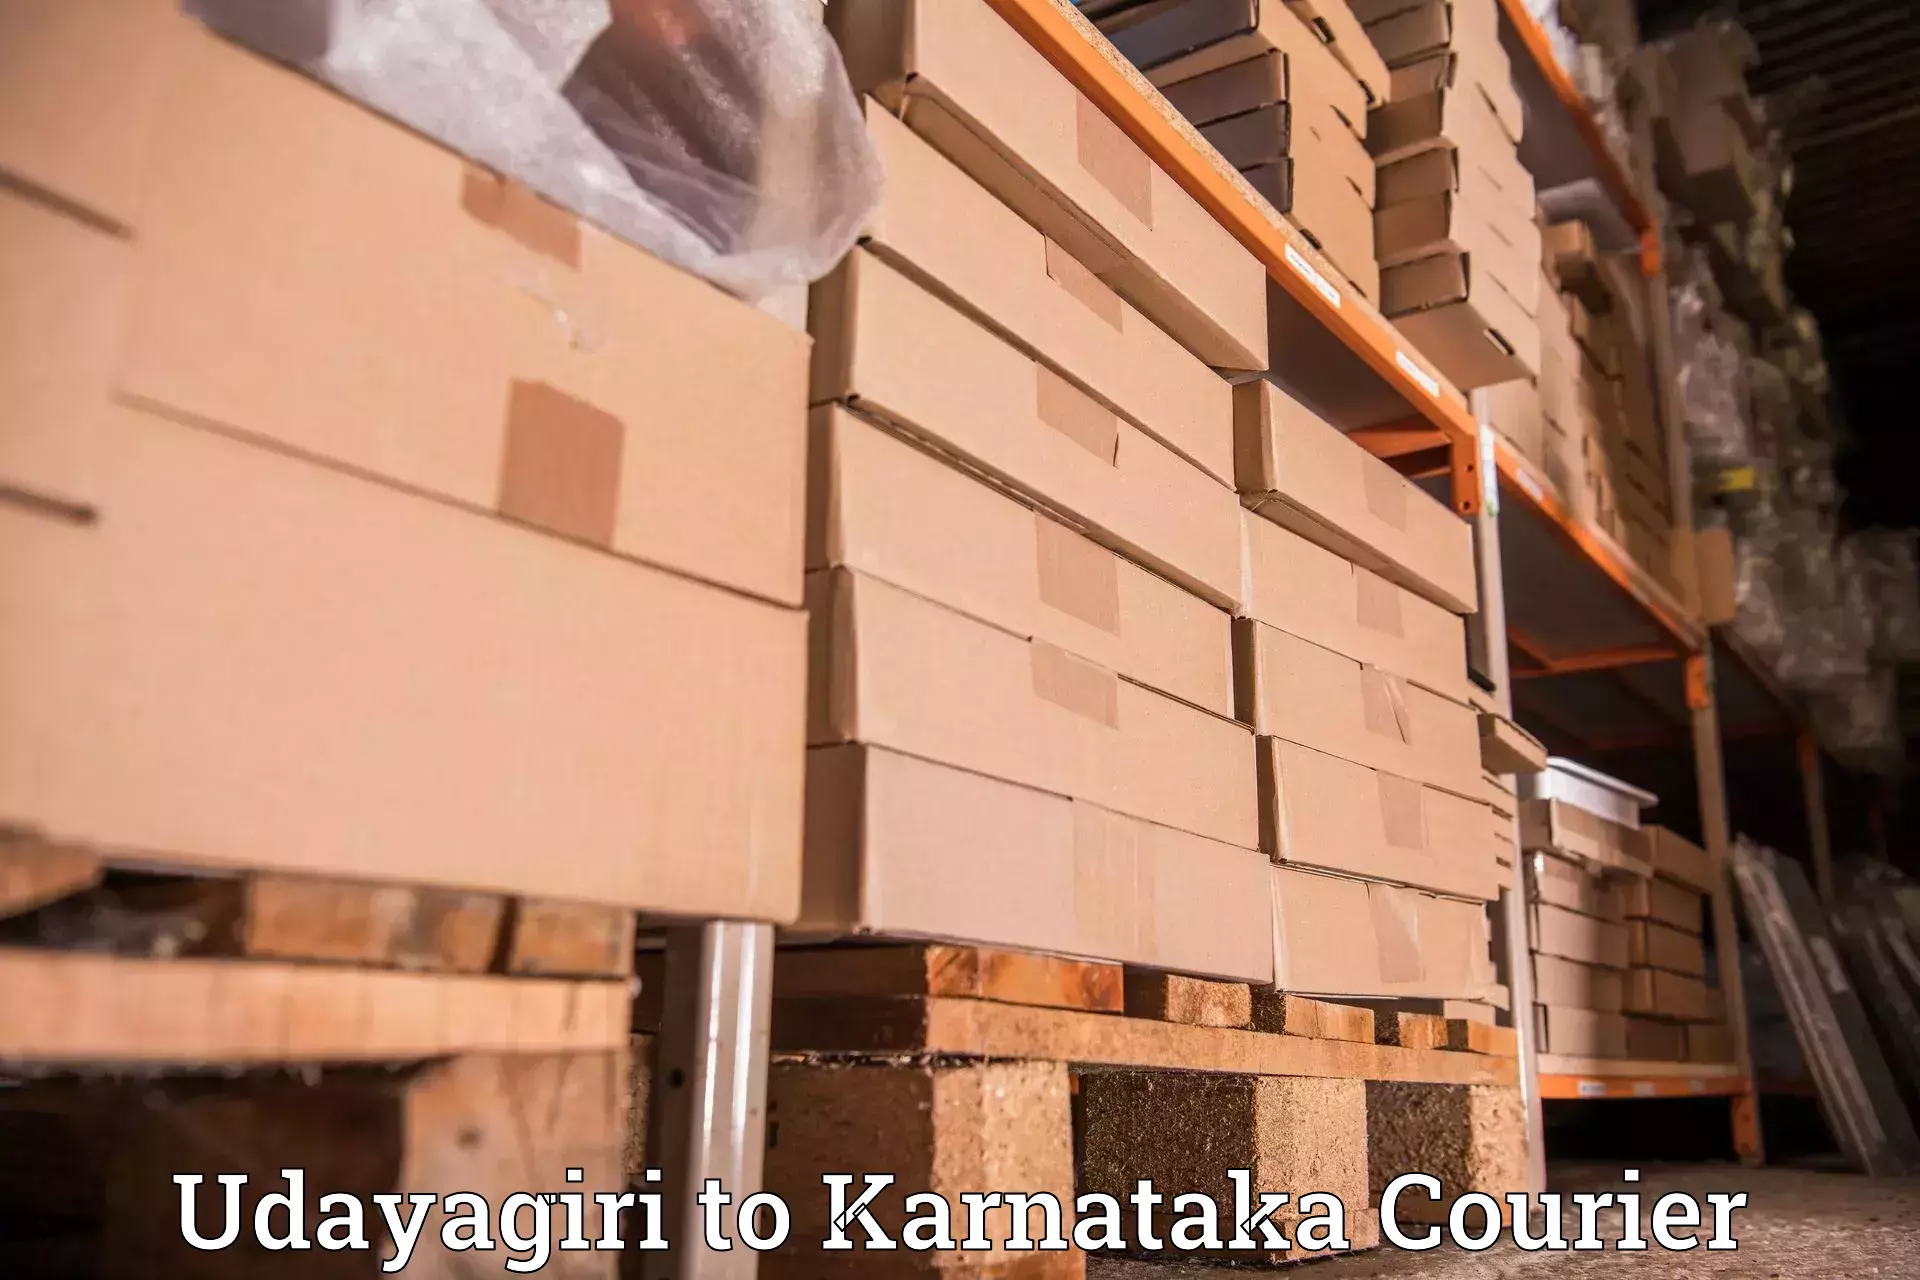 Cash on delivery service Udayagiri to Karnataka